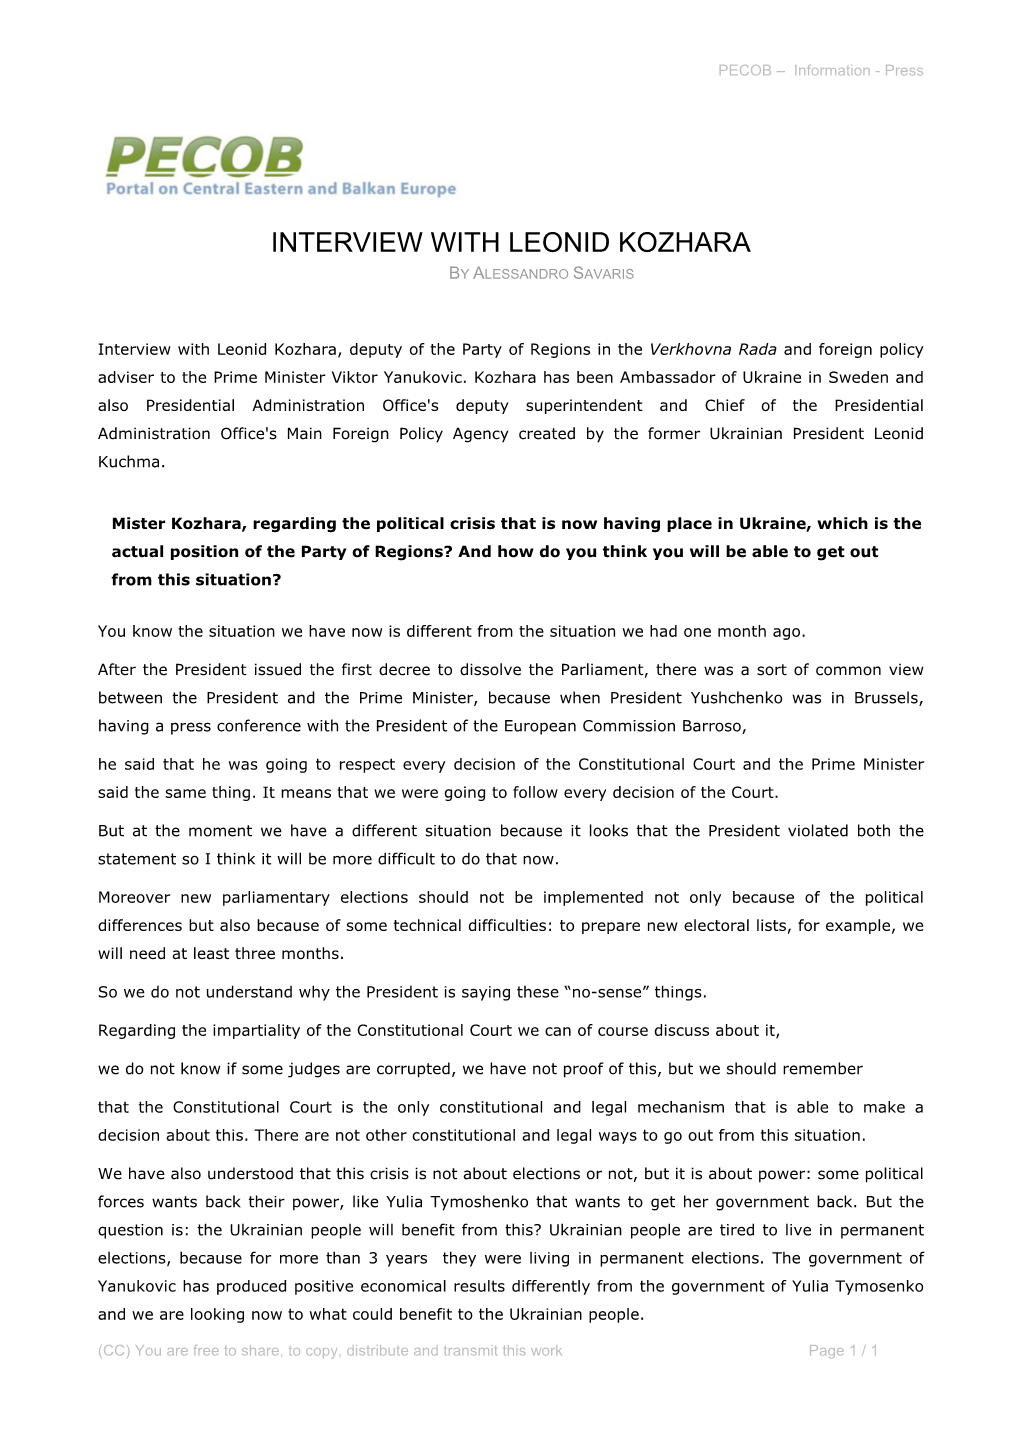 Interview with Leonid Kozhara by Alessandro Savaris